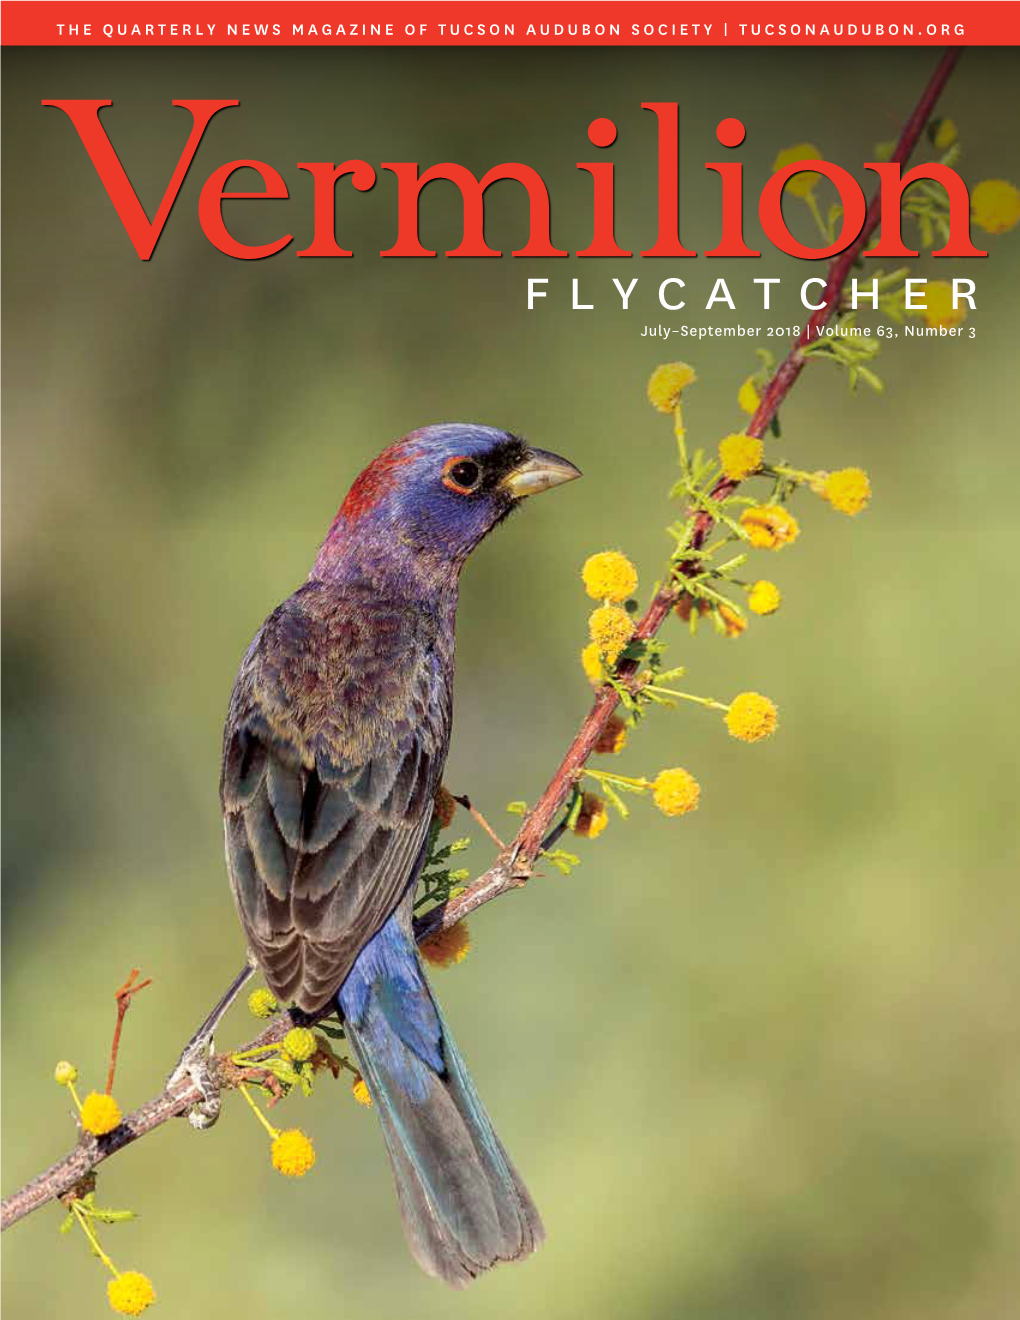 Flycatcher July–September 2018 | Volume 63, Number 3 FEATURES 4 Southeast Arizona Birding Festival 8 Introducing Board President, Mary Walker